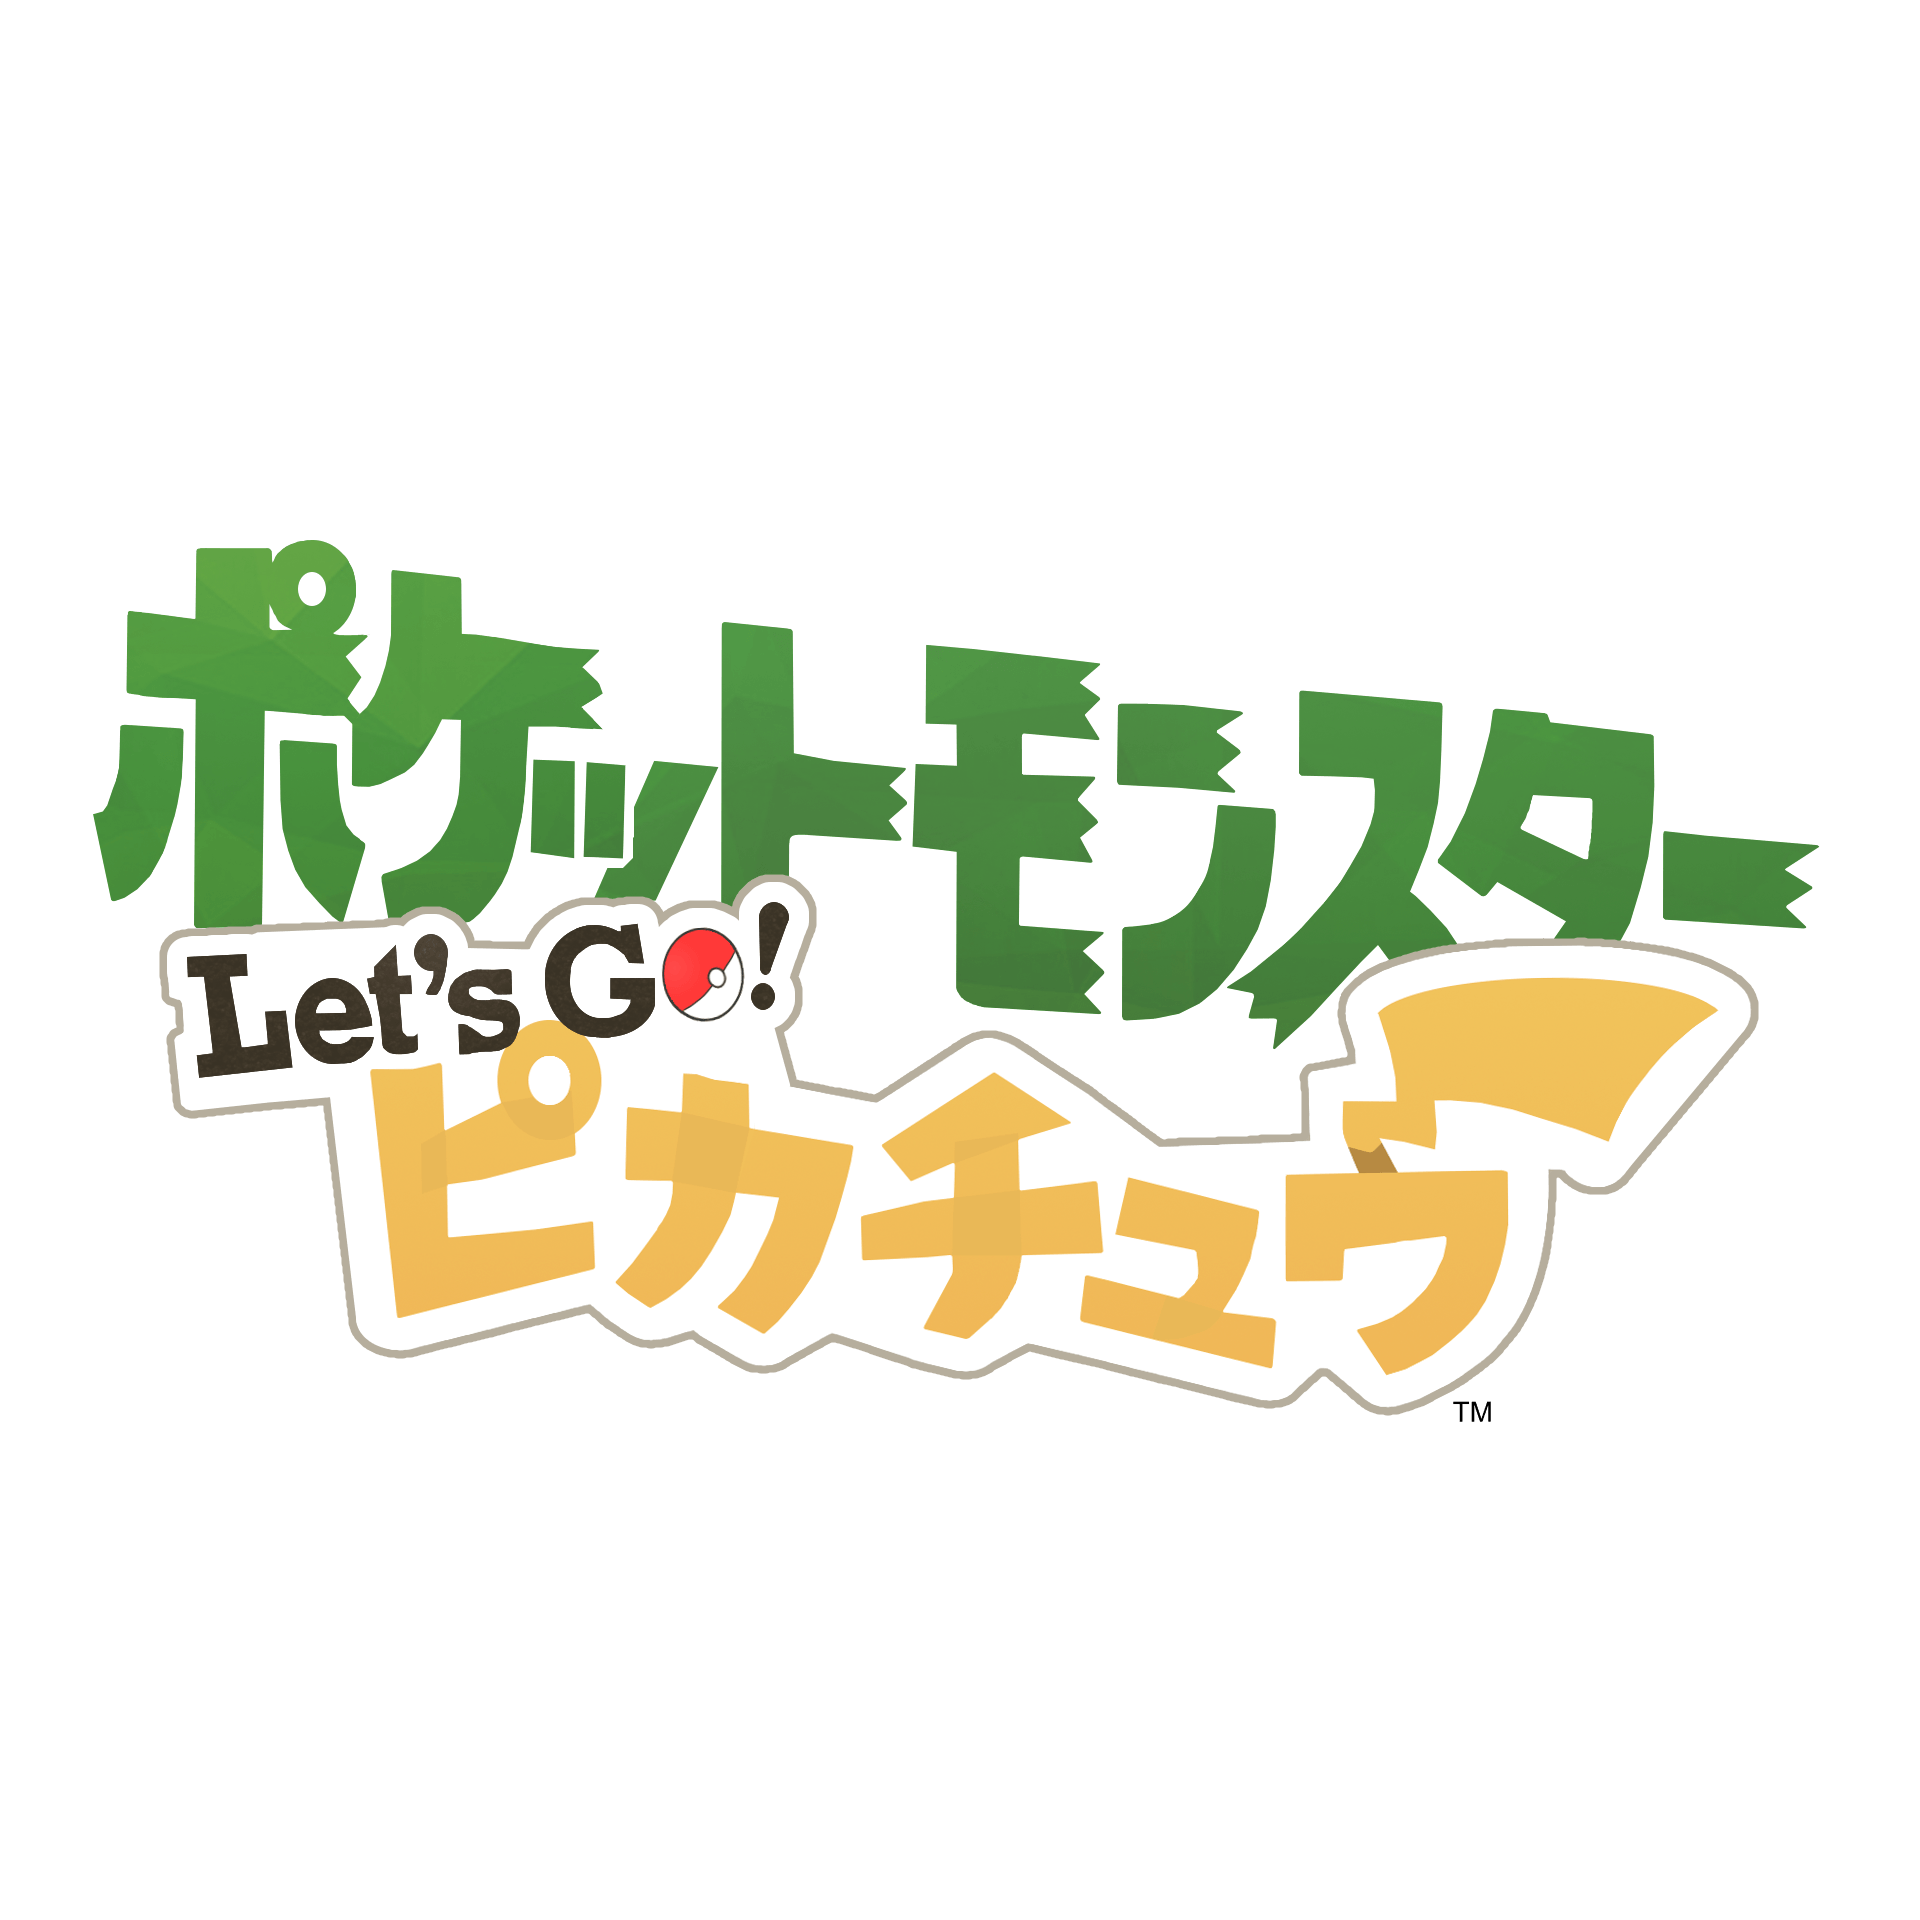 High Resolution Reddit Logo - Higher Resolution of the [Pokémon Let's Go! Pikachu] Logo (Japanese ...